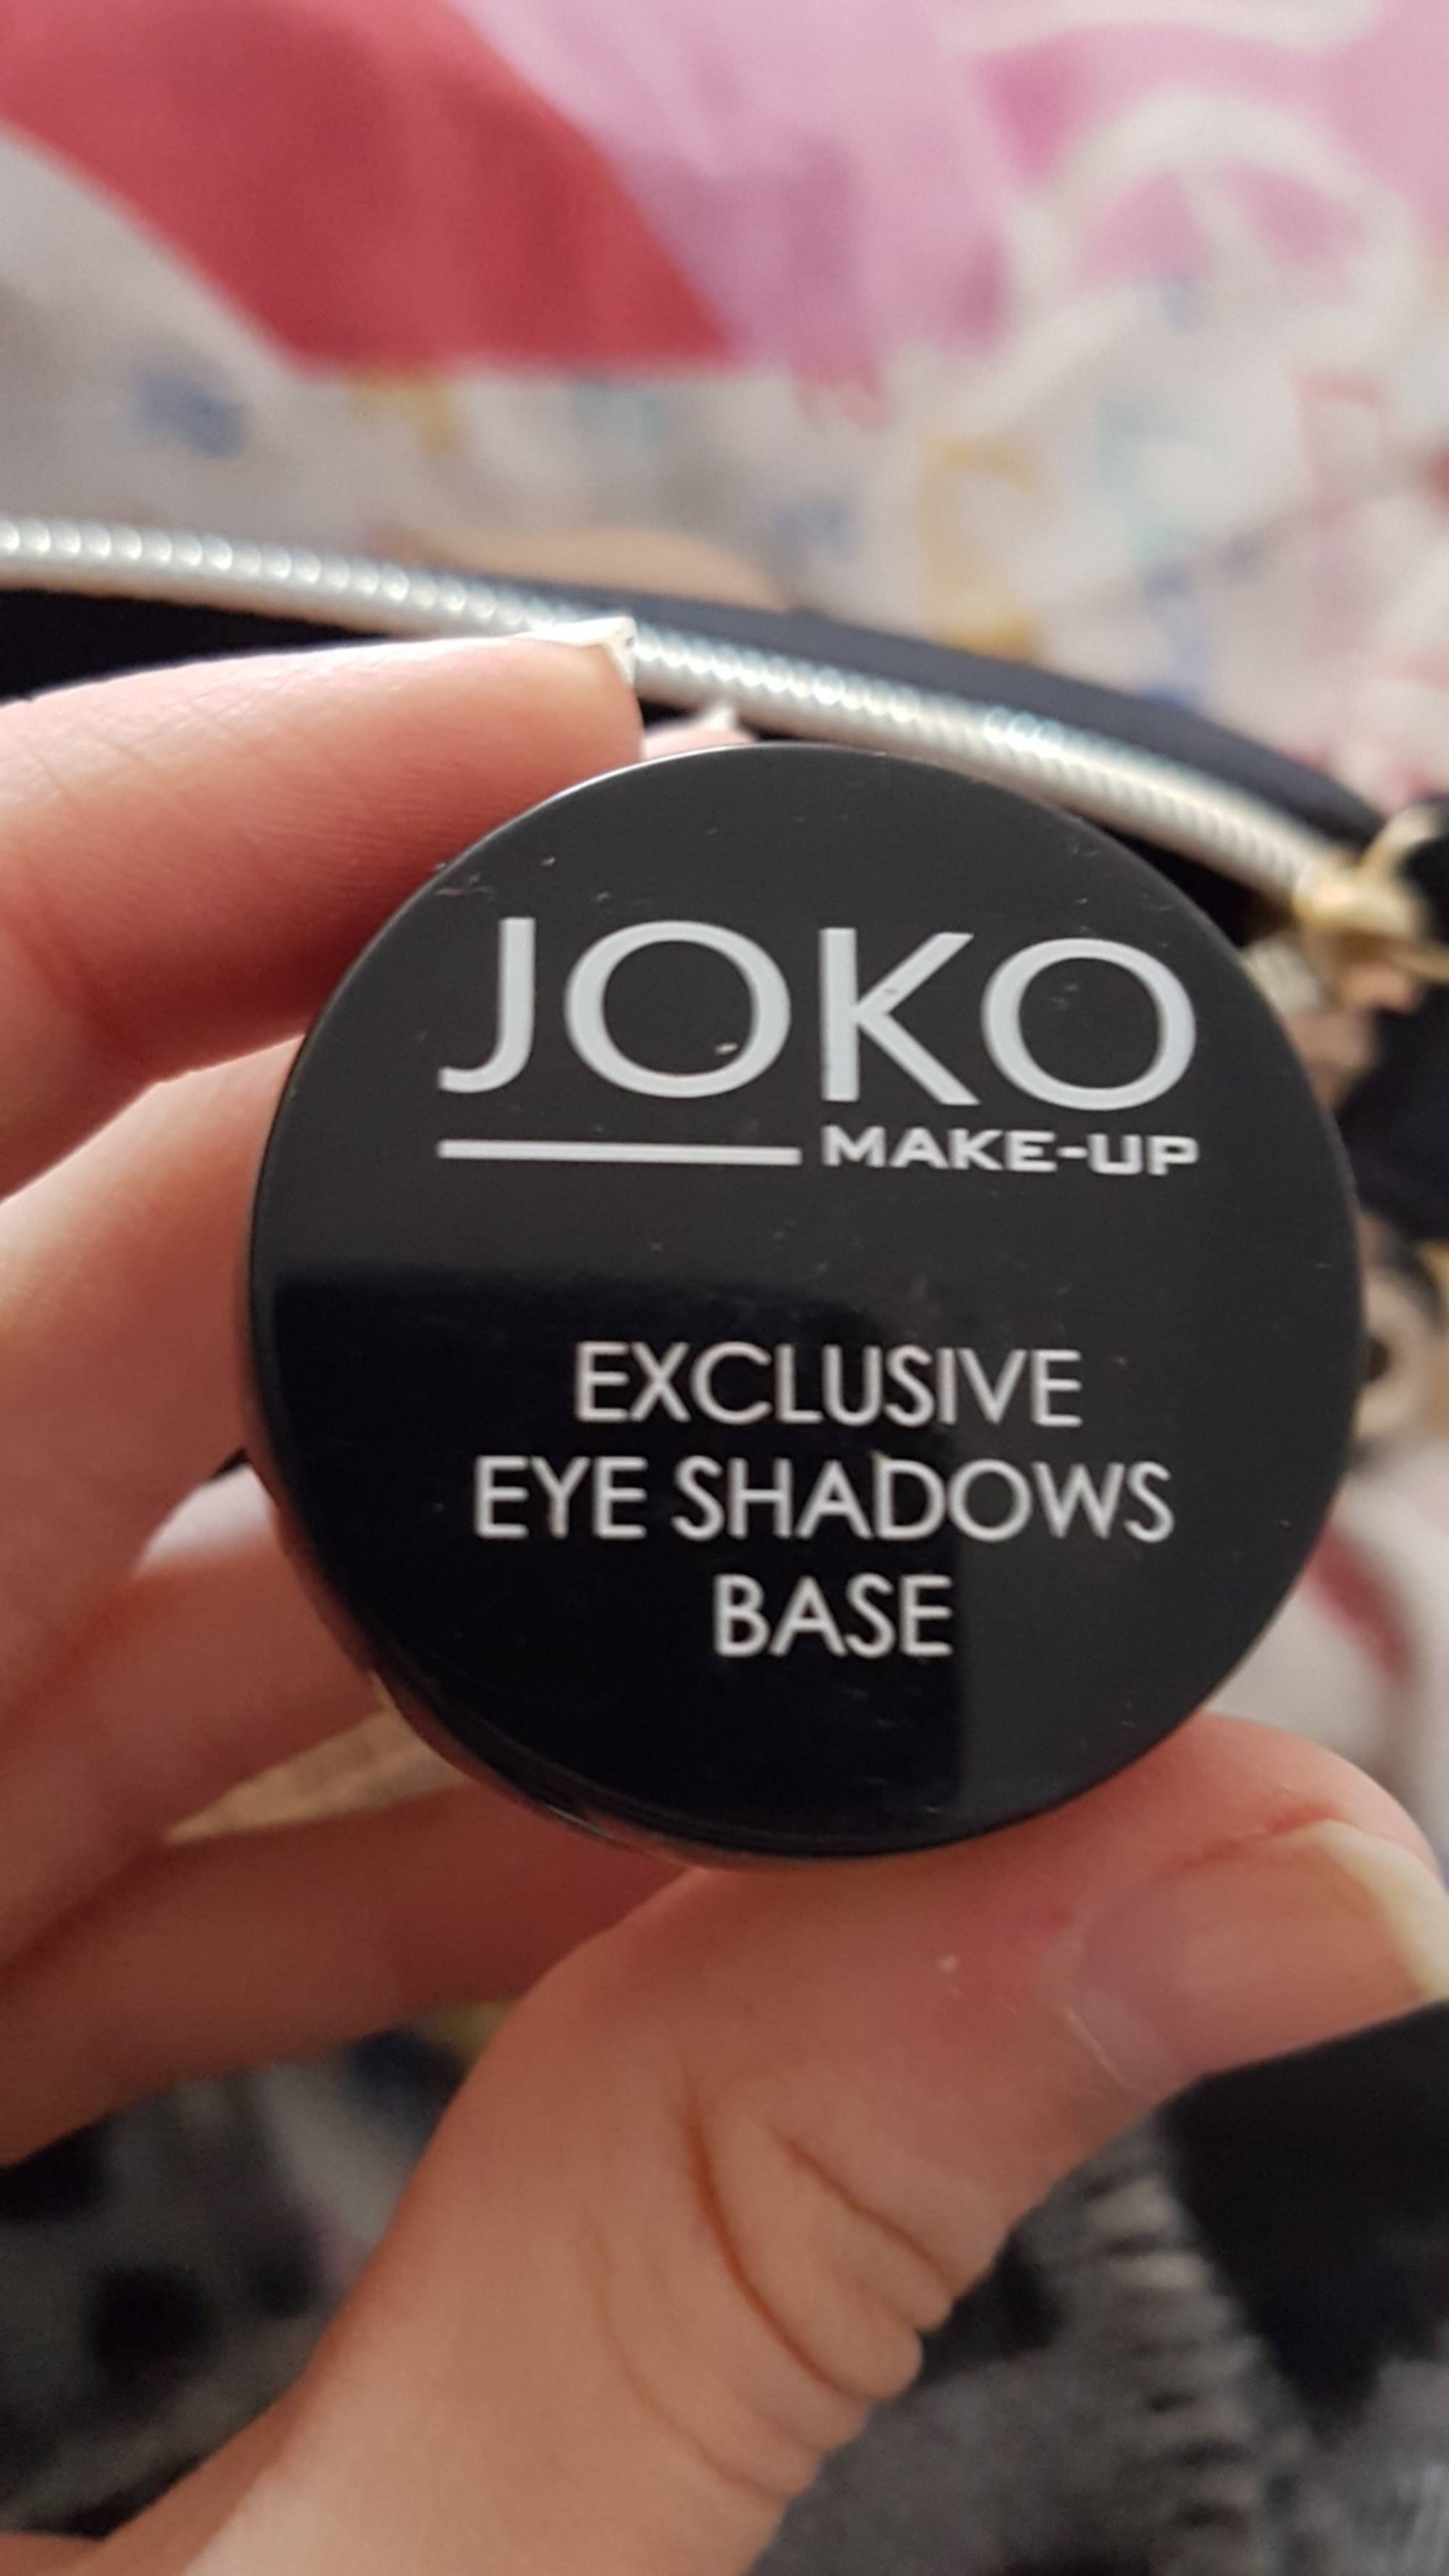 JOKO MAKE-UP - Exclusive eye shadows base